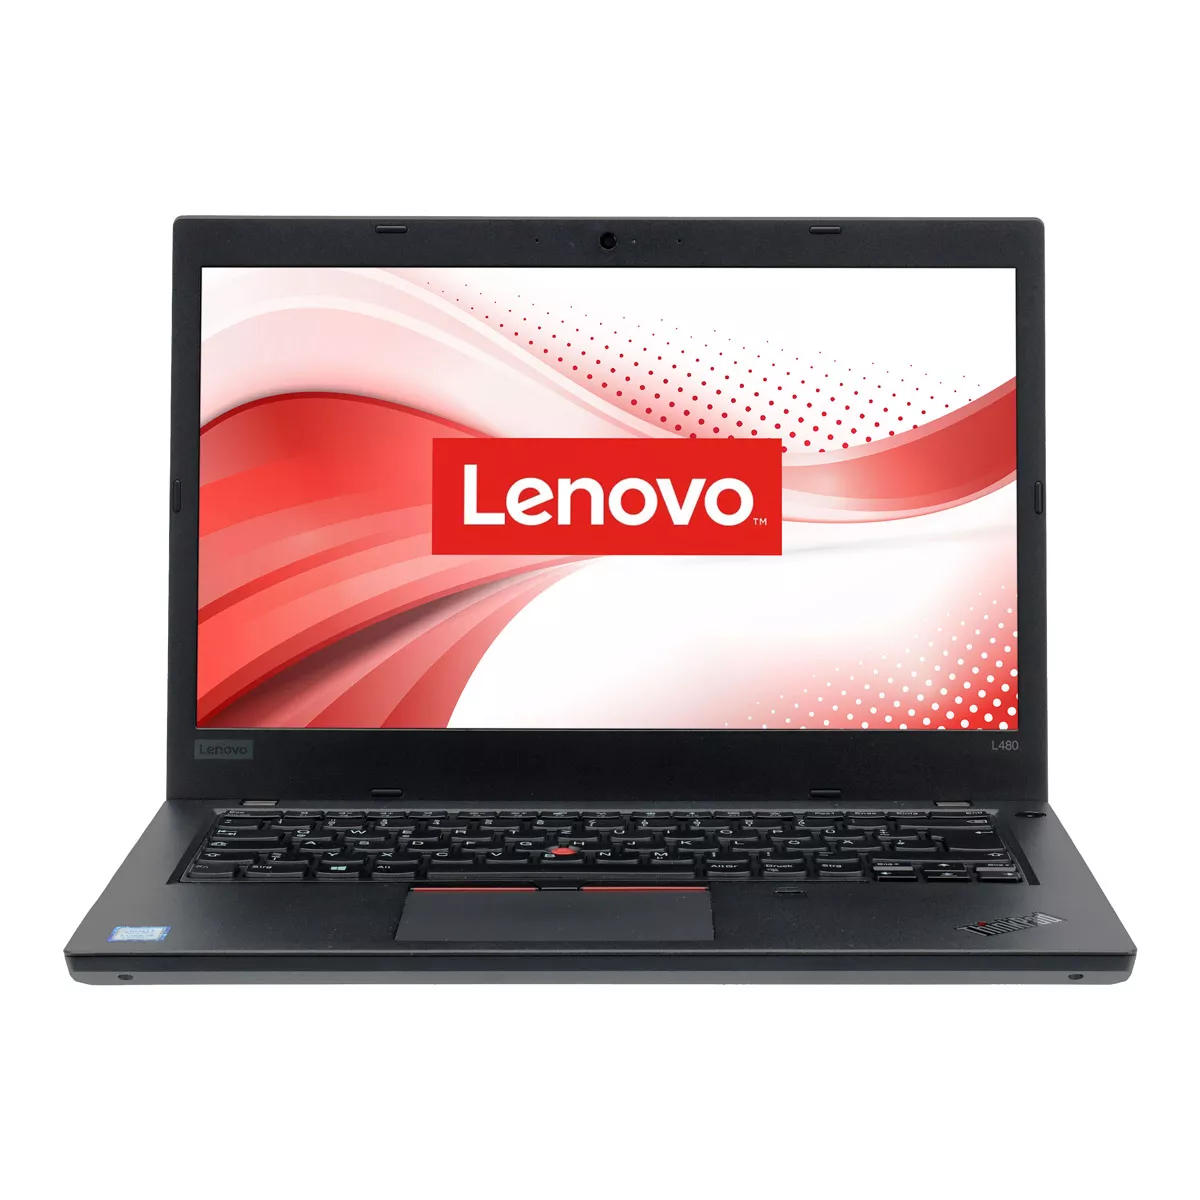 Lenovo ThinkPad L480 Core i5 8250U Full-HD 16 GB 240 GB nVME M.2 SSD Webcam A